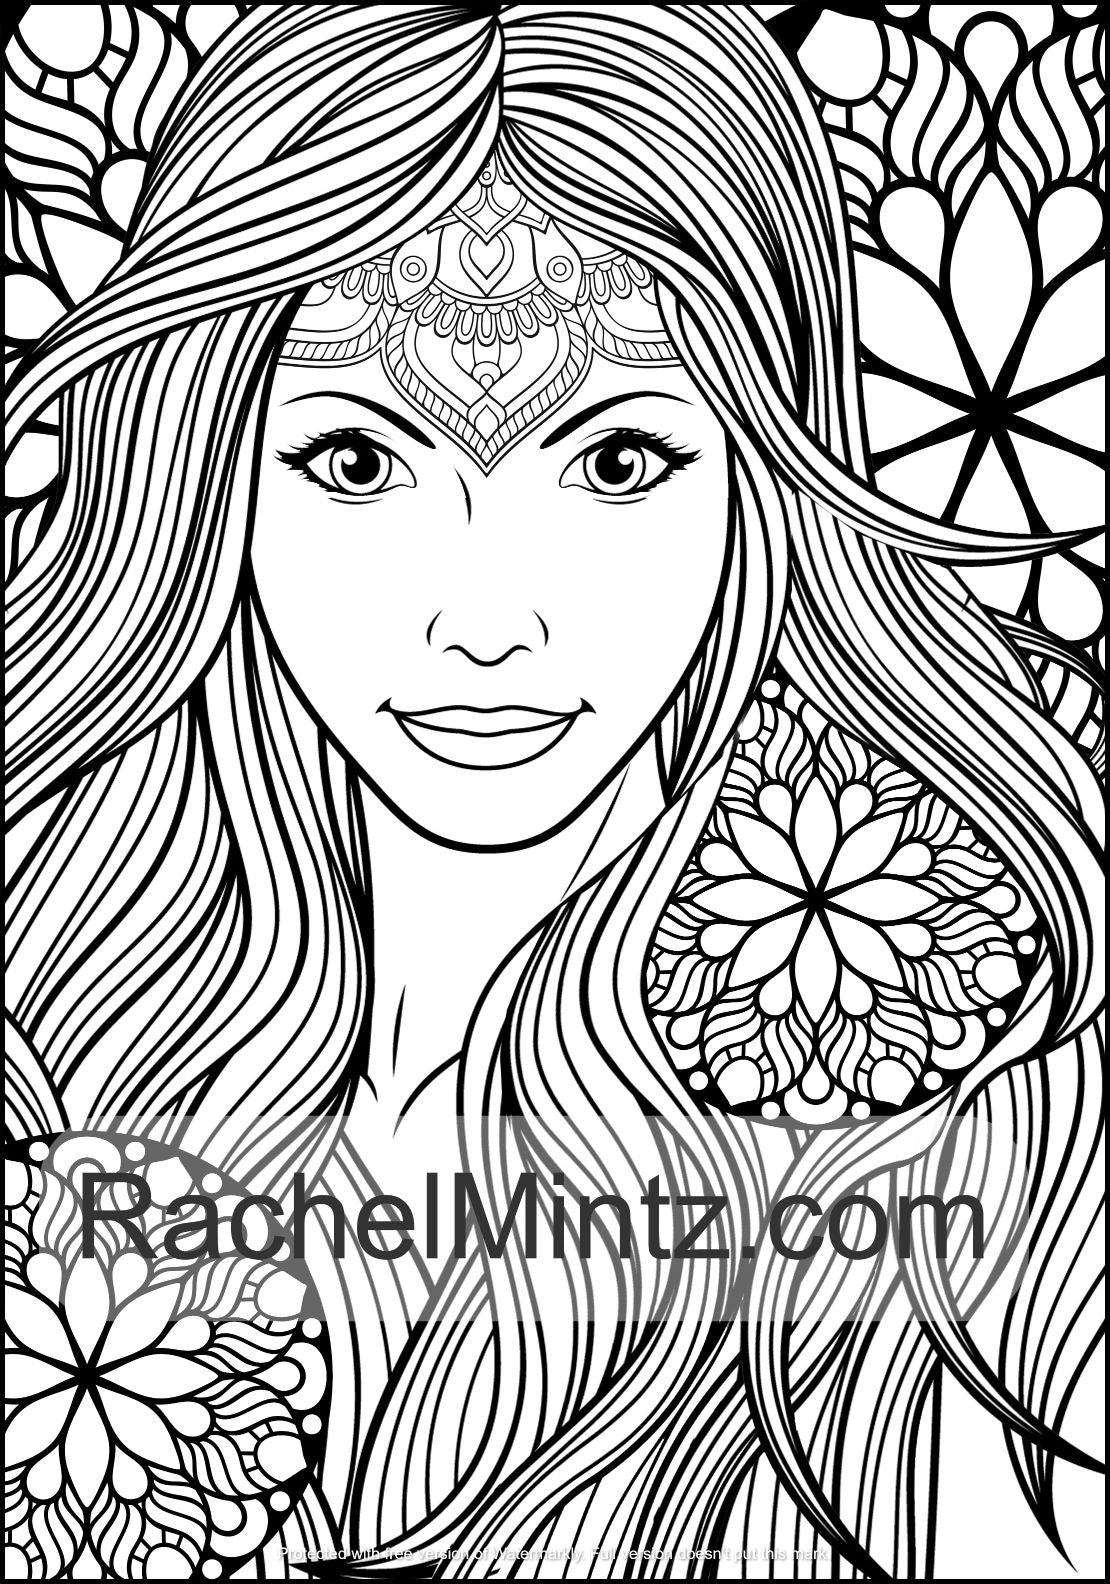 Mandala Women Coloring Book (Digital Format) – Rachel Mintz Coloring Books